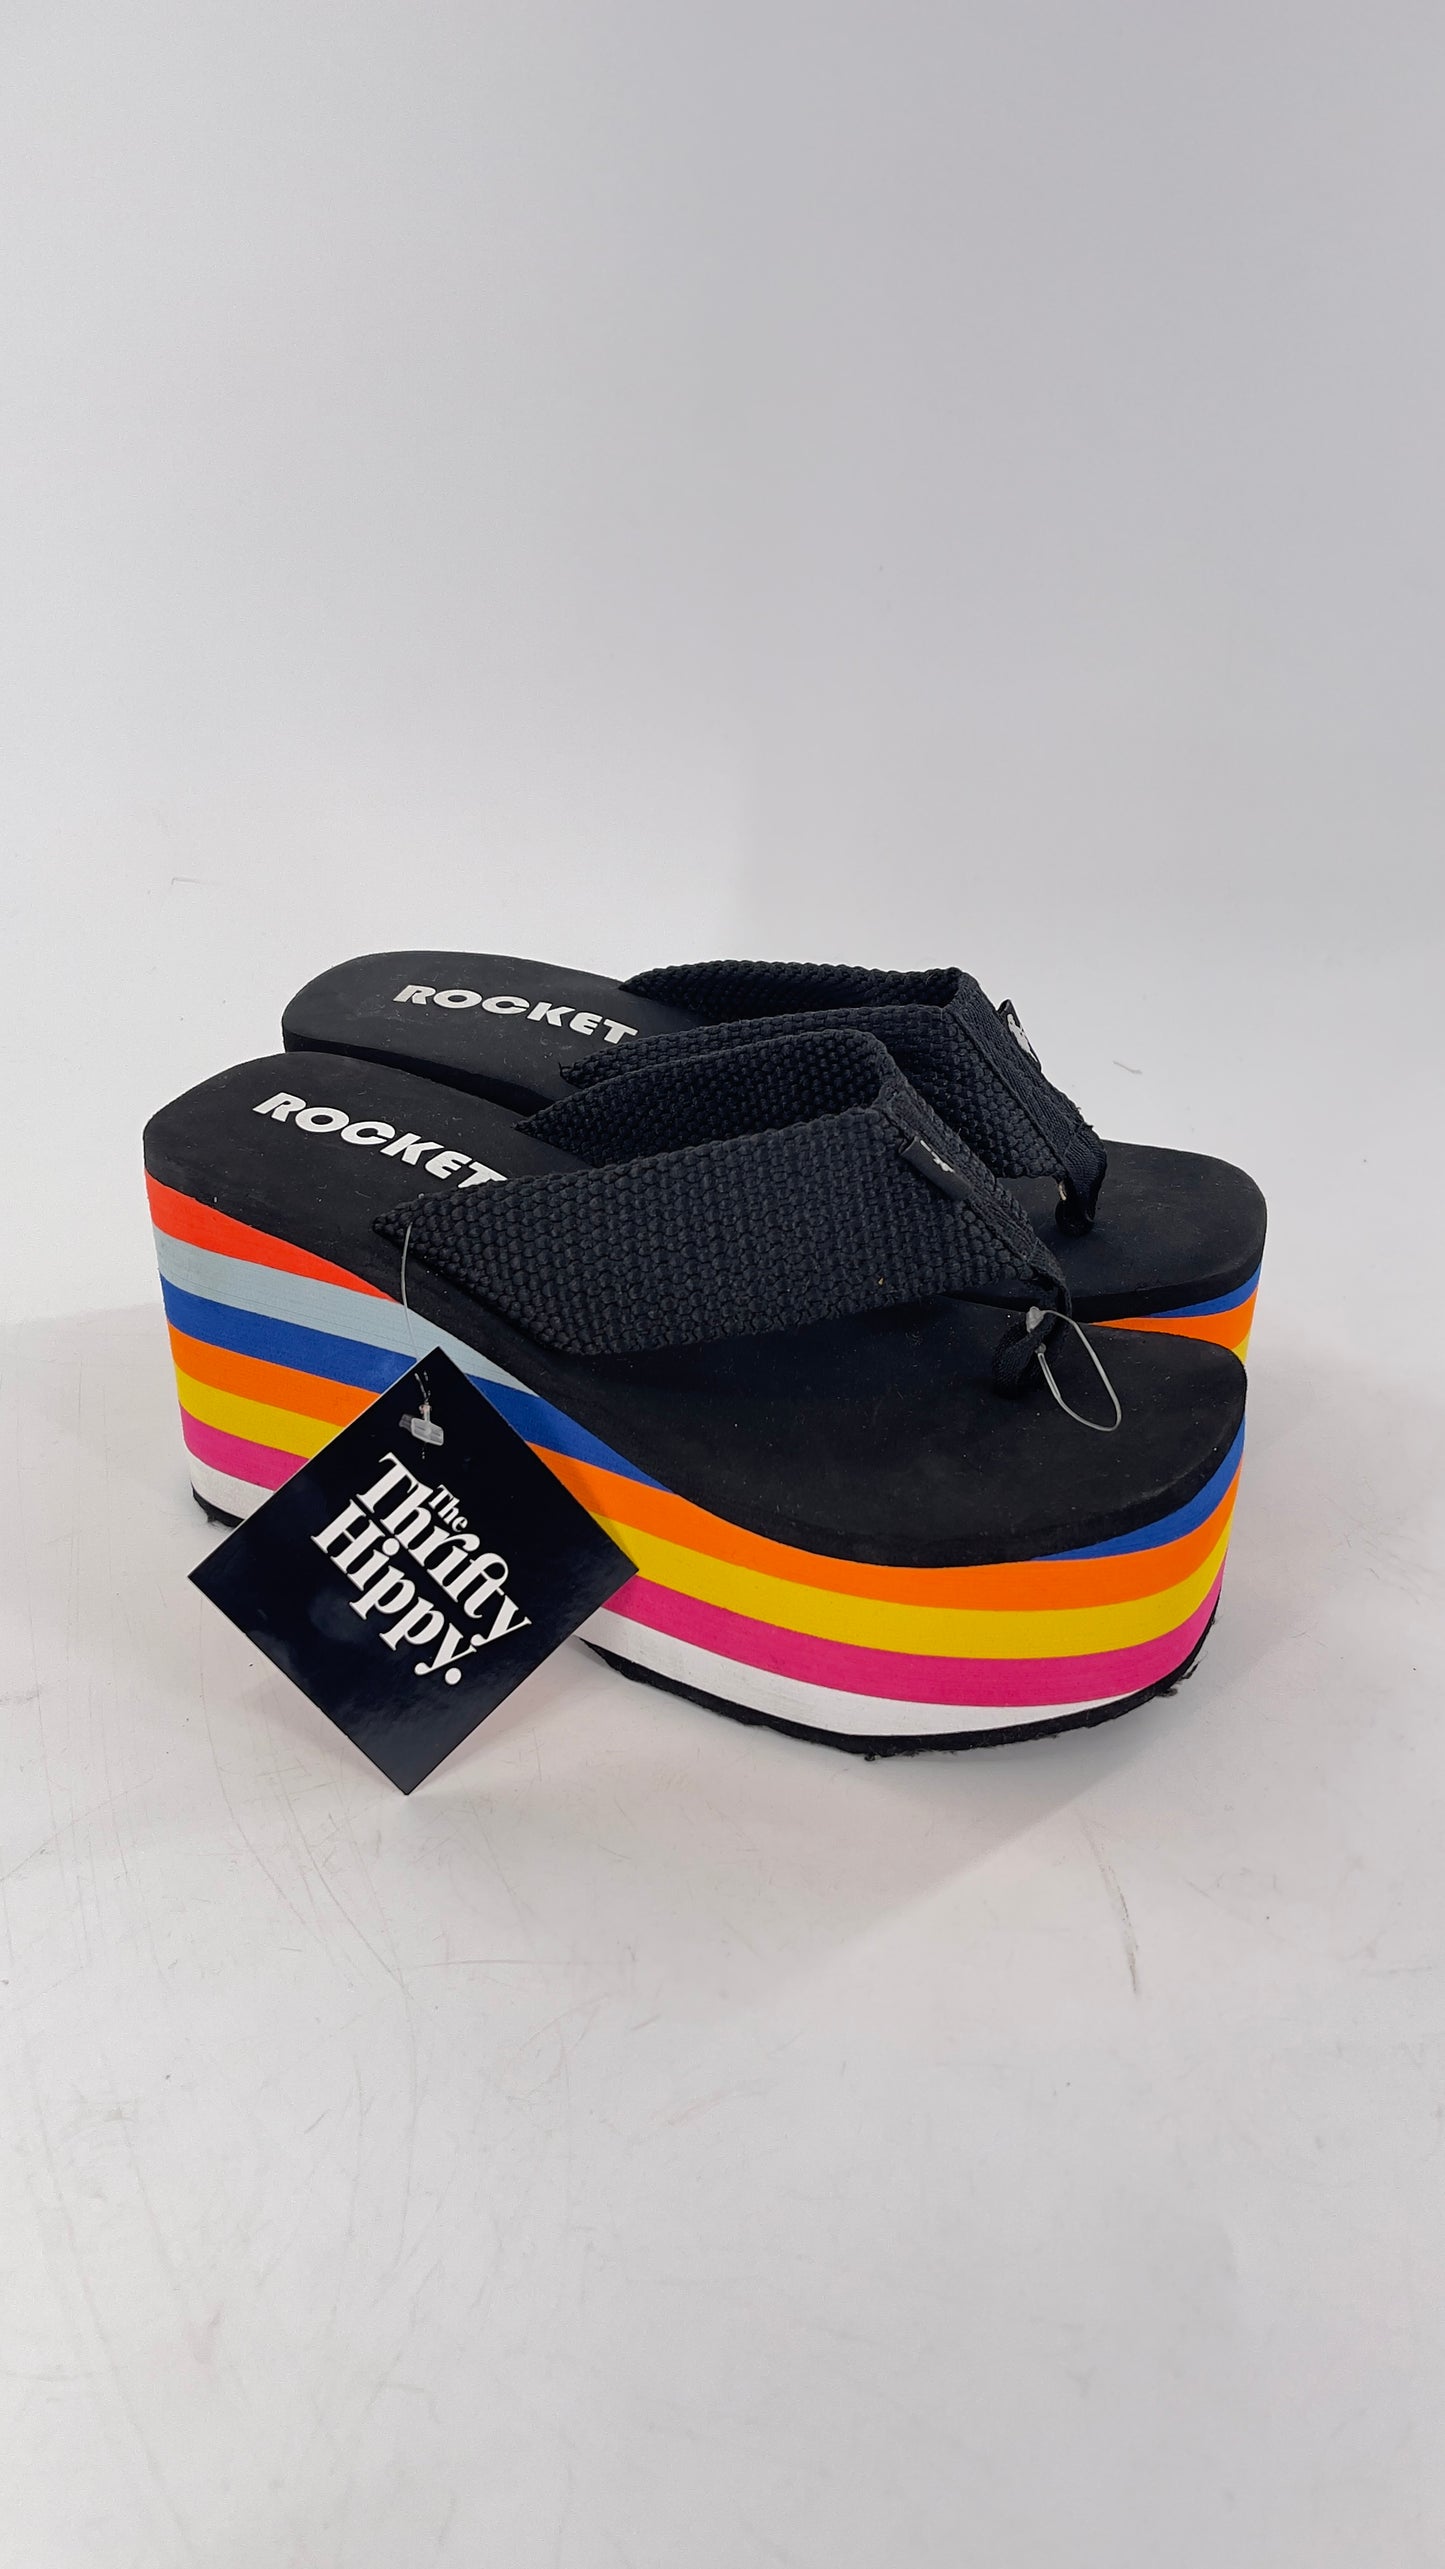 Rocket Dog Rainbow Platform Thong Sandal (8)